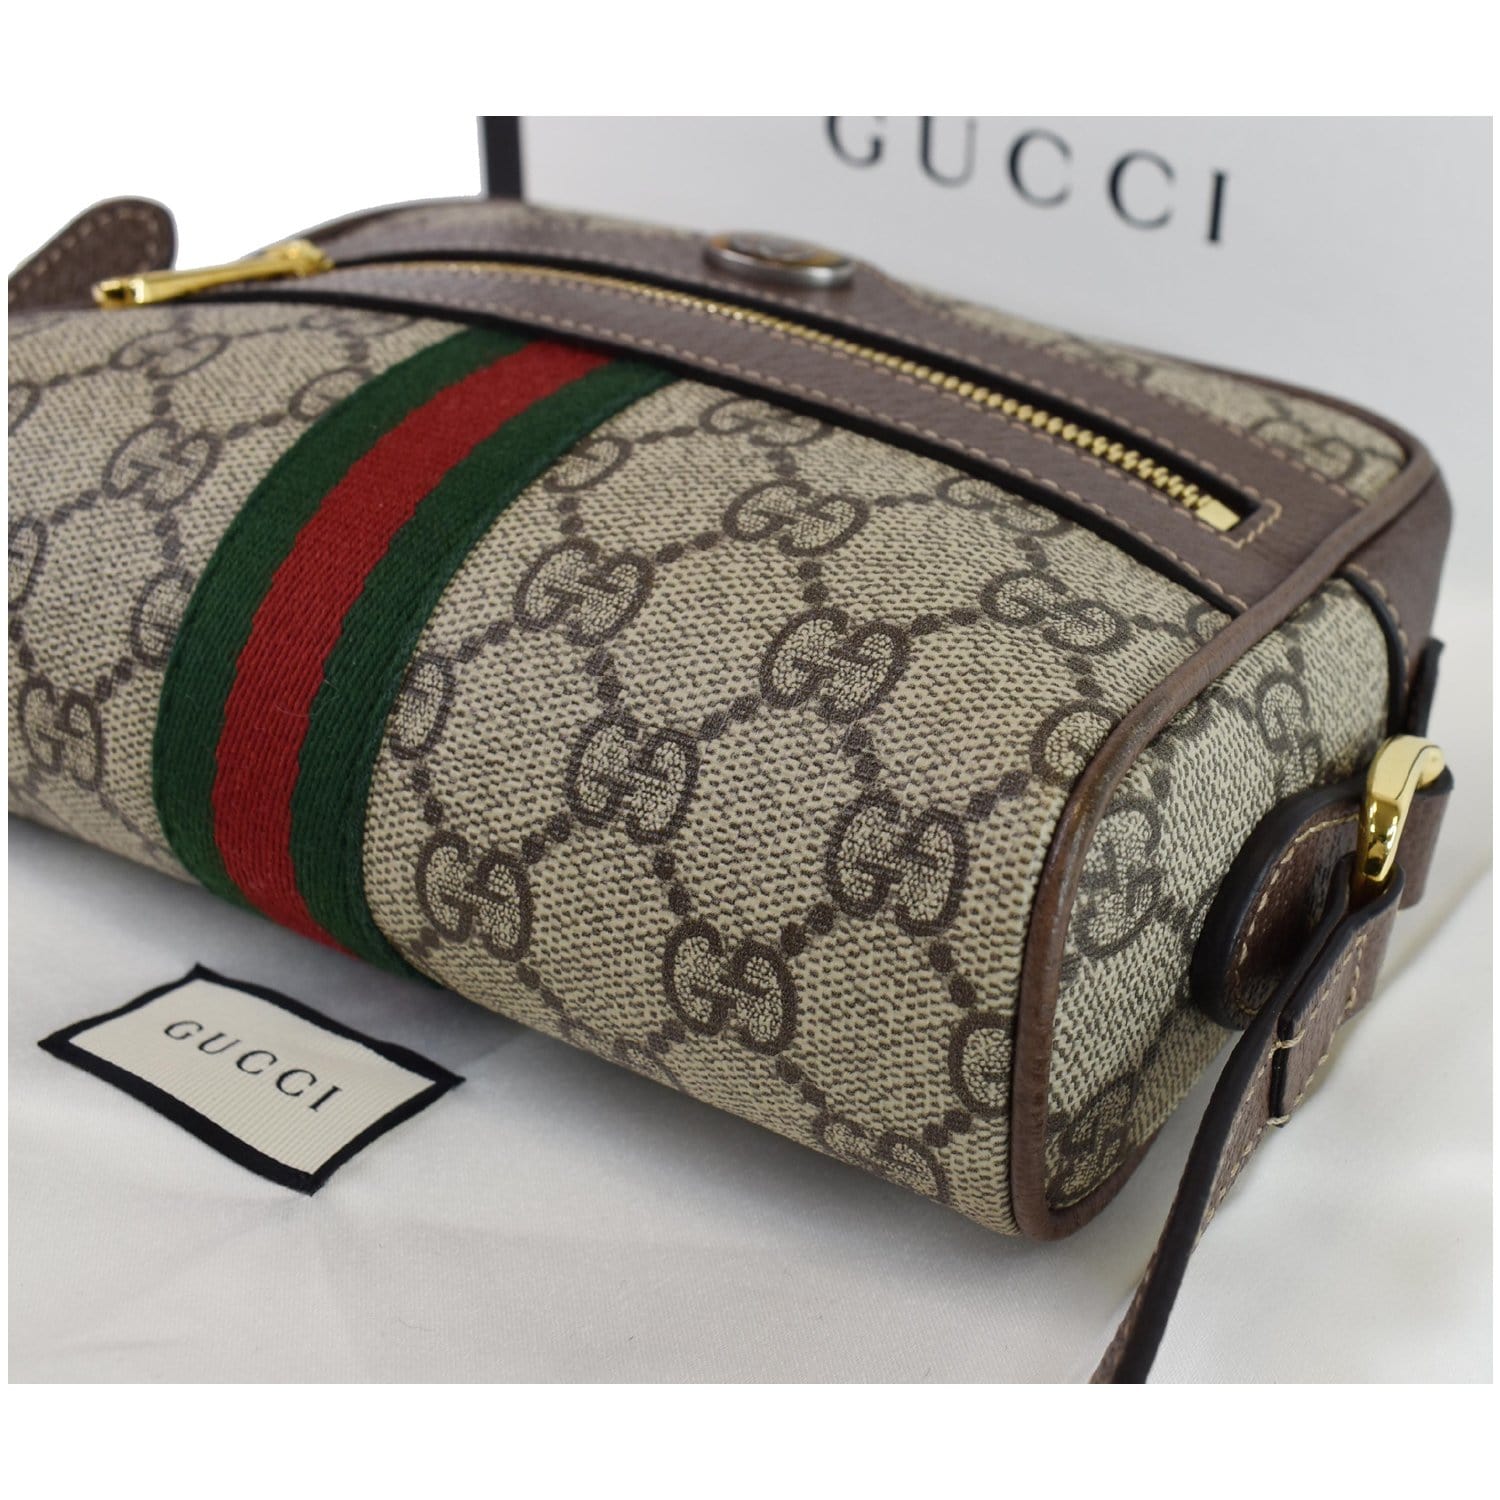 GG Supreme Mini Shoulder Bag in Beige - Gucci